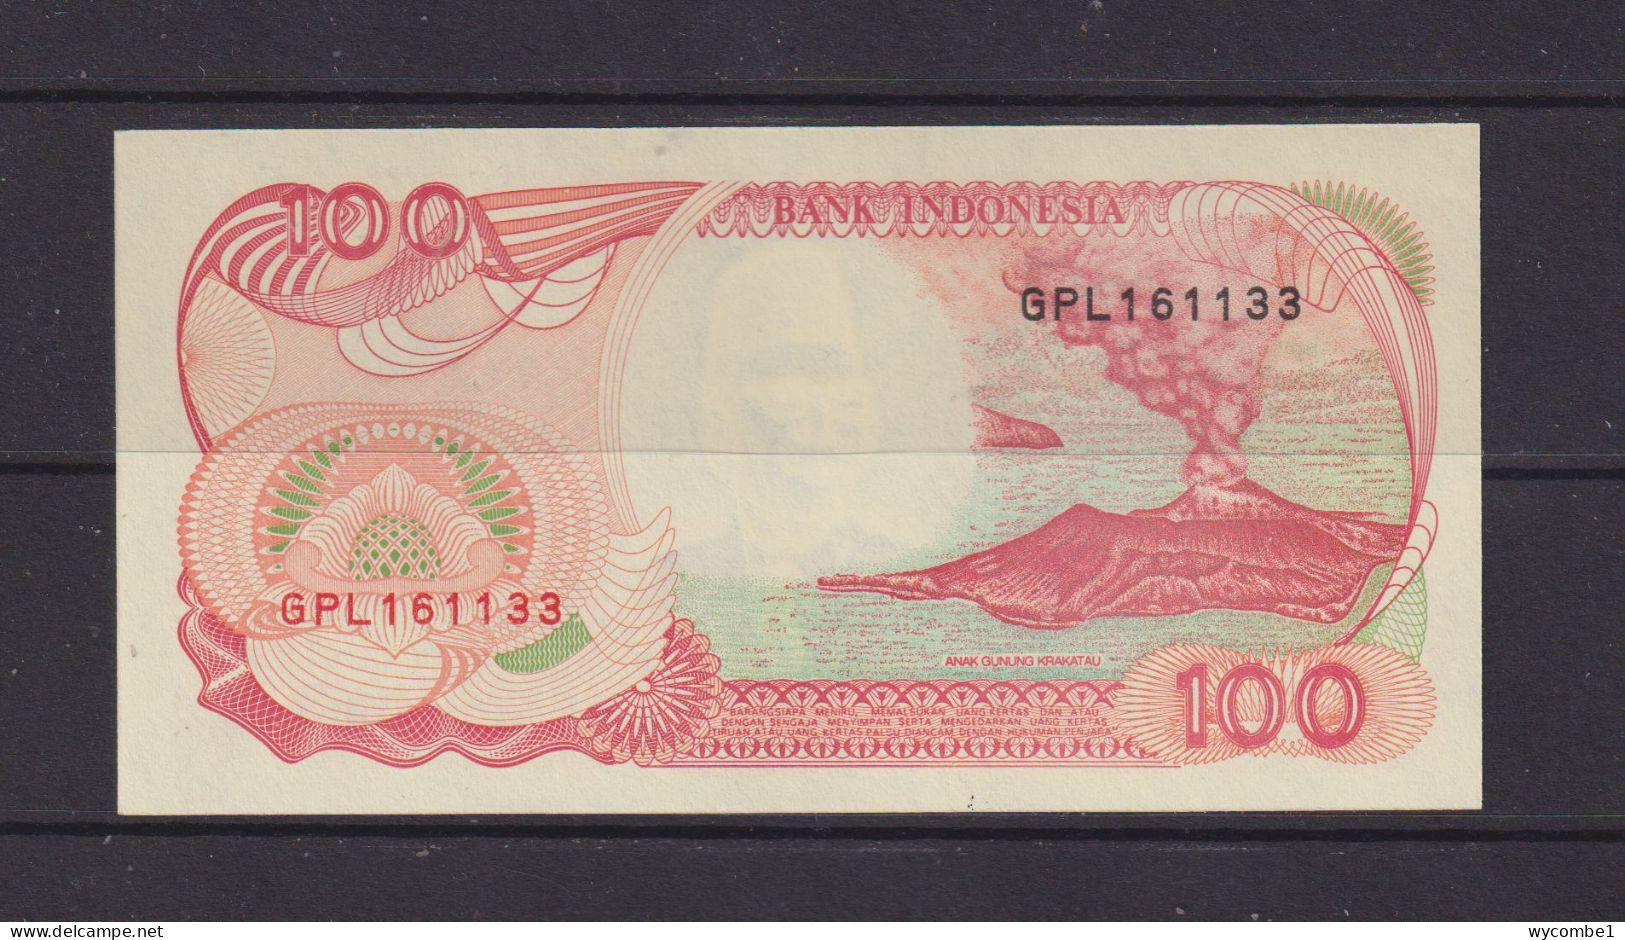 INDONESIA - 1992 100 Rupiah UNC Banknote - Indonesia